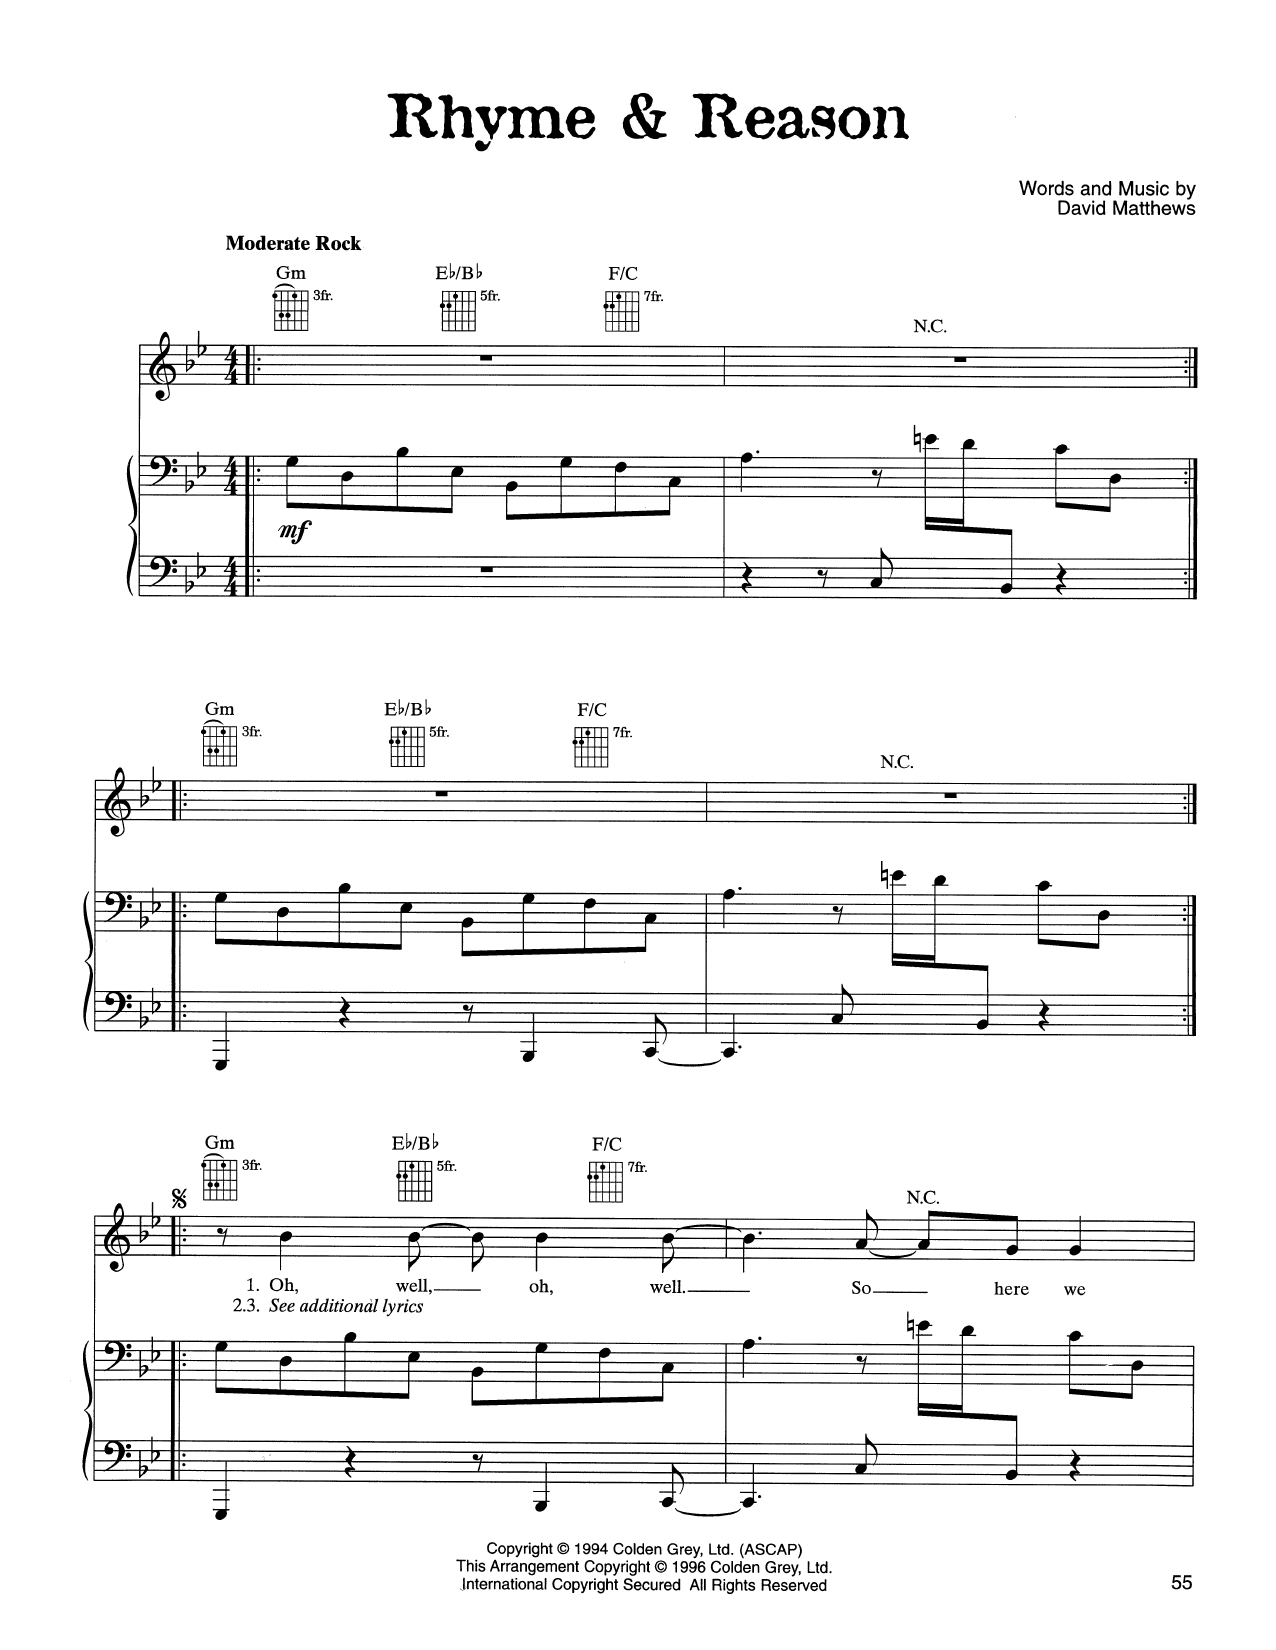 dave-matthews-band-rhyme-reason-sheet-music-download-pdf-score-166138